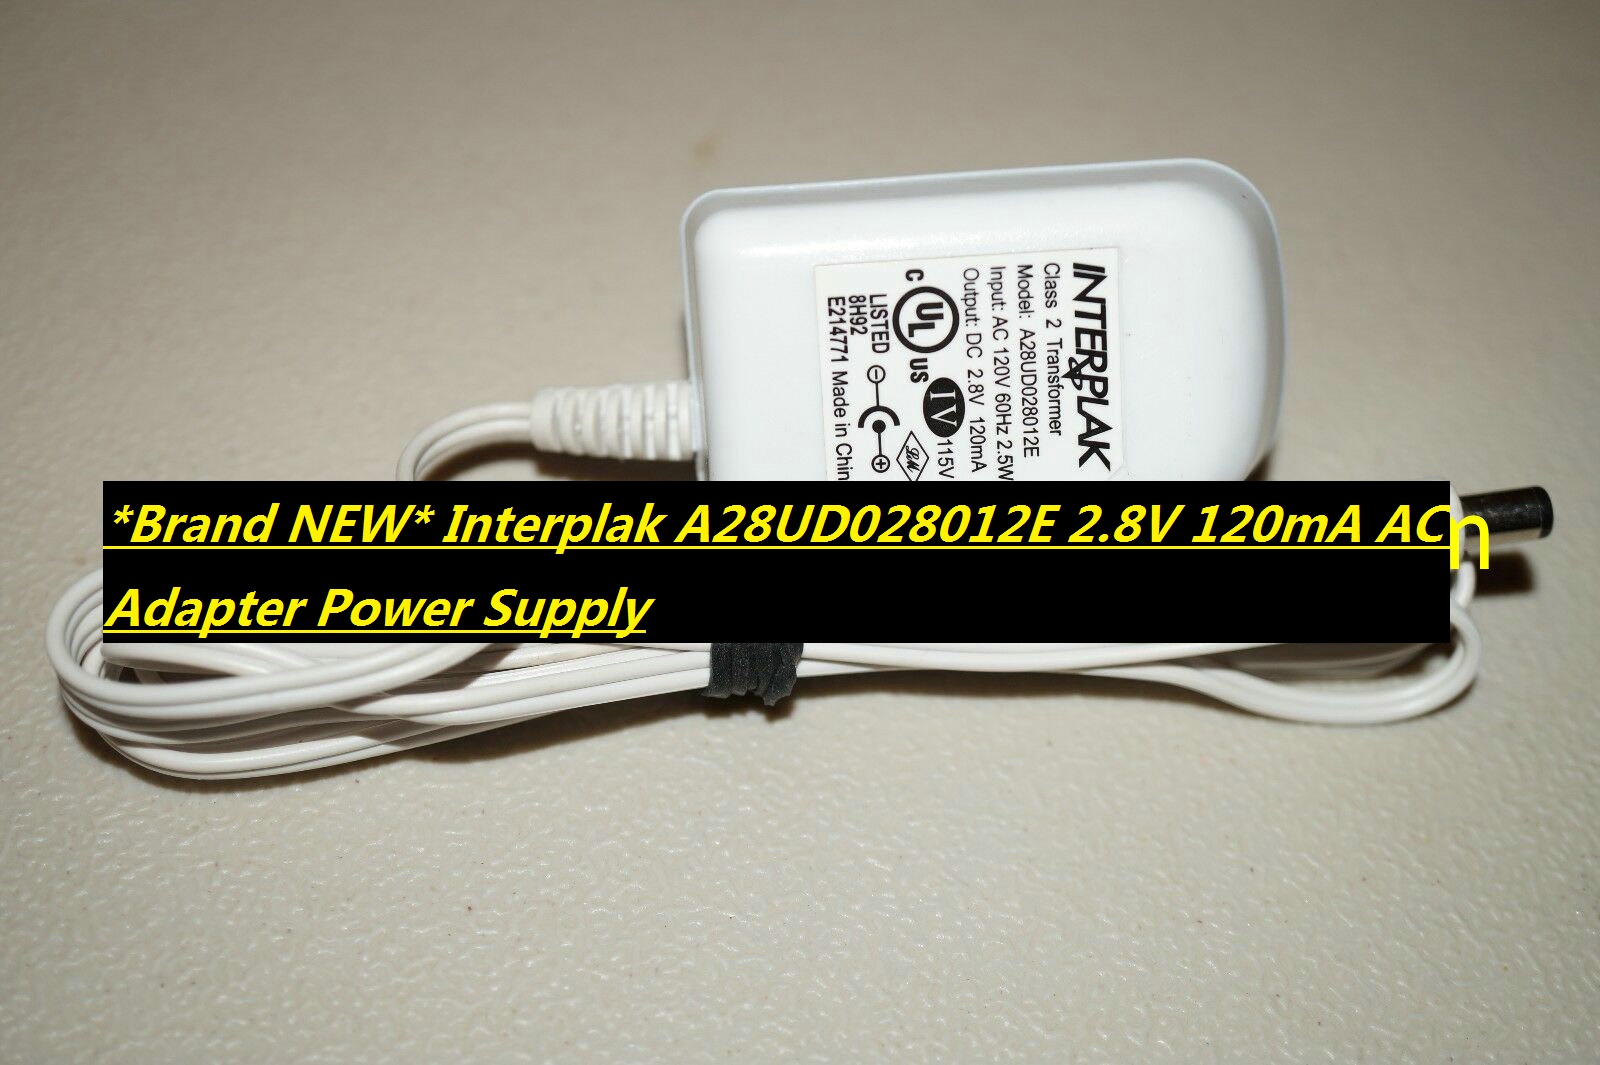 *Brand NEW* Interplak A28UD028012E 2.8V 120mA AC Adapter Power Supply